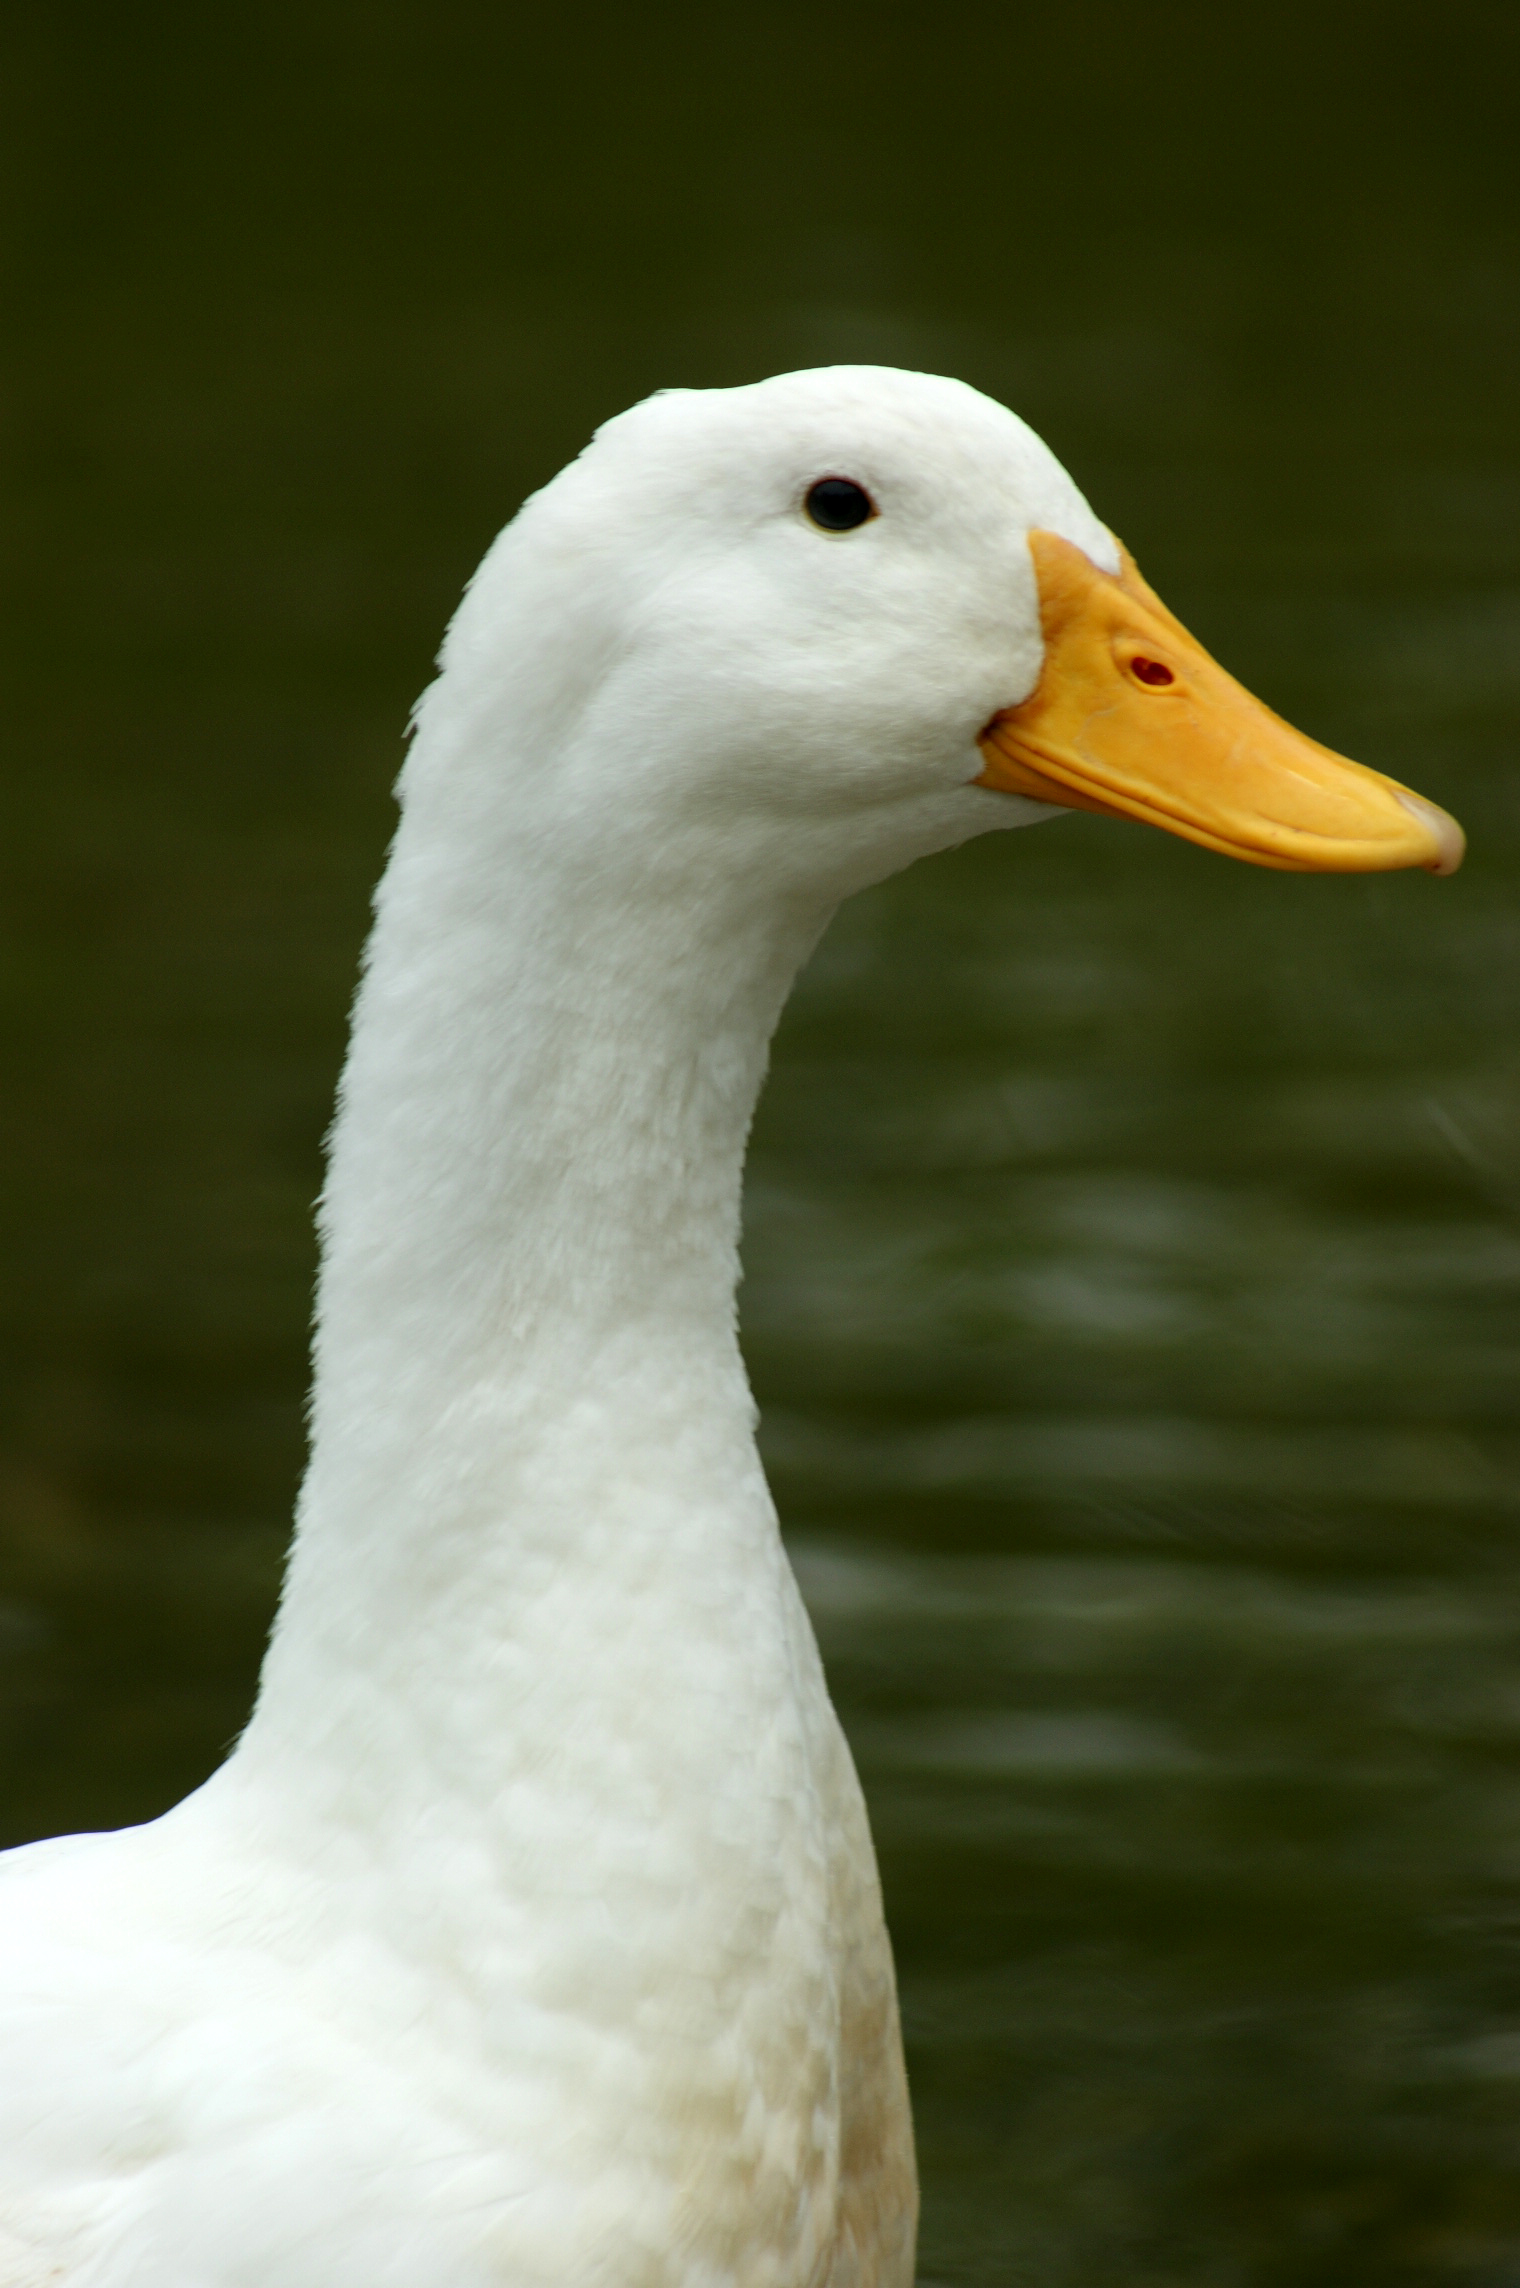 File:Neck of white duck..jpg - Wikimedia Commons